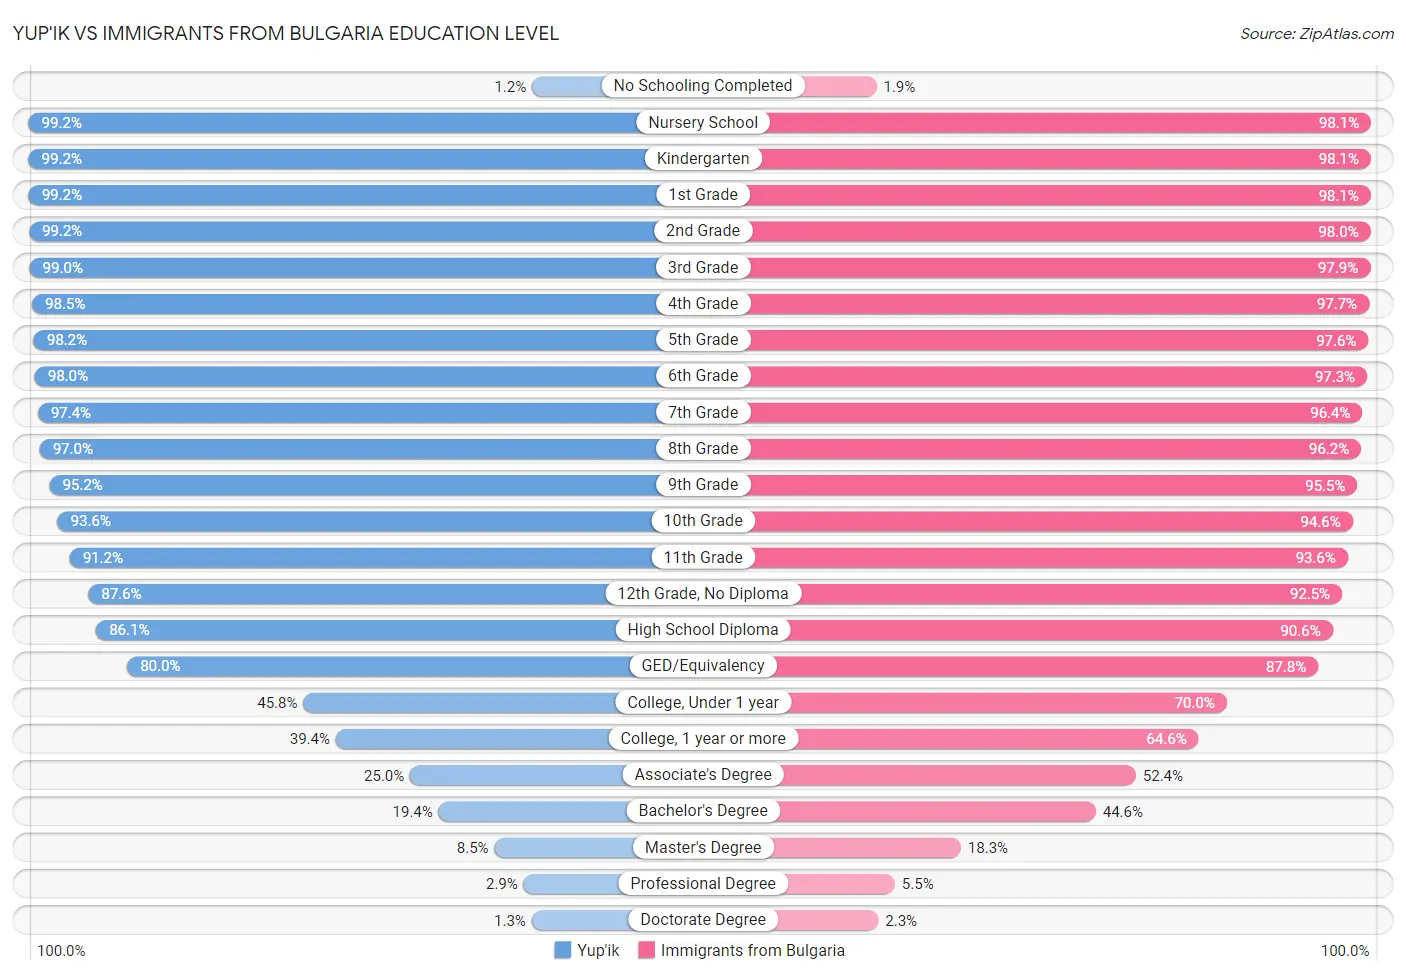 Yup'ik vs Immigrants from Bulgaria Education Level